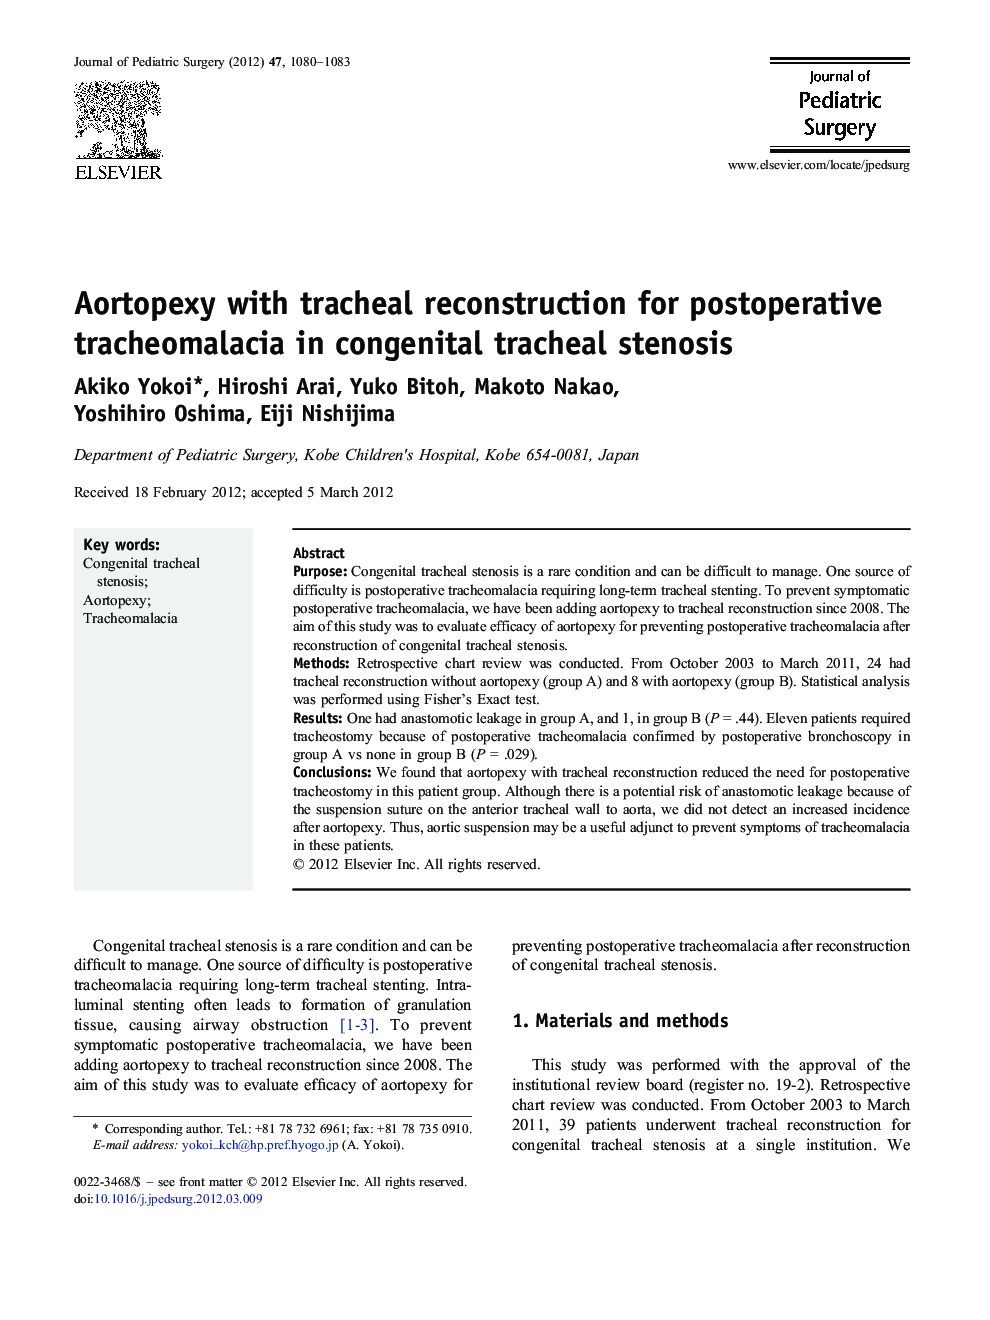 Aortopexy with tracheal reconstruction for postoperative tracheomalacia in congenital tracheal stenosis